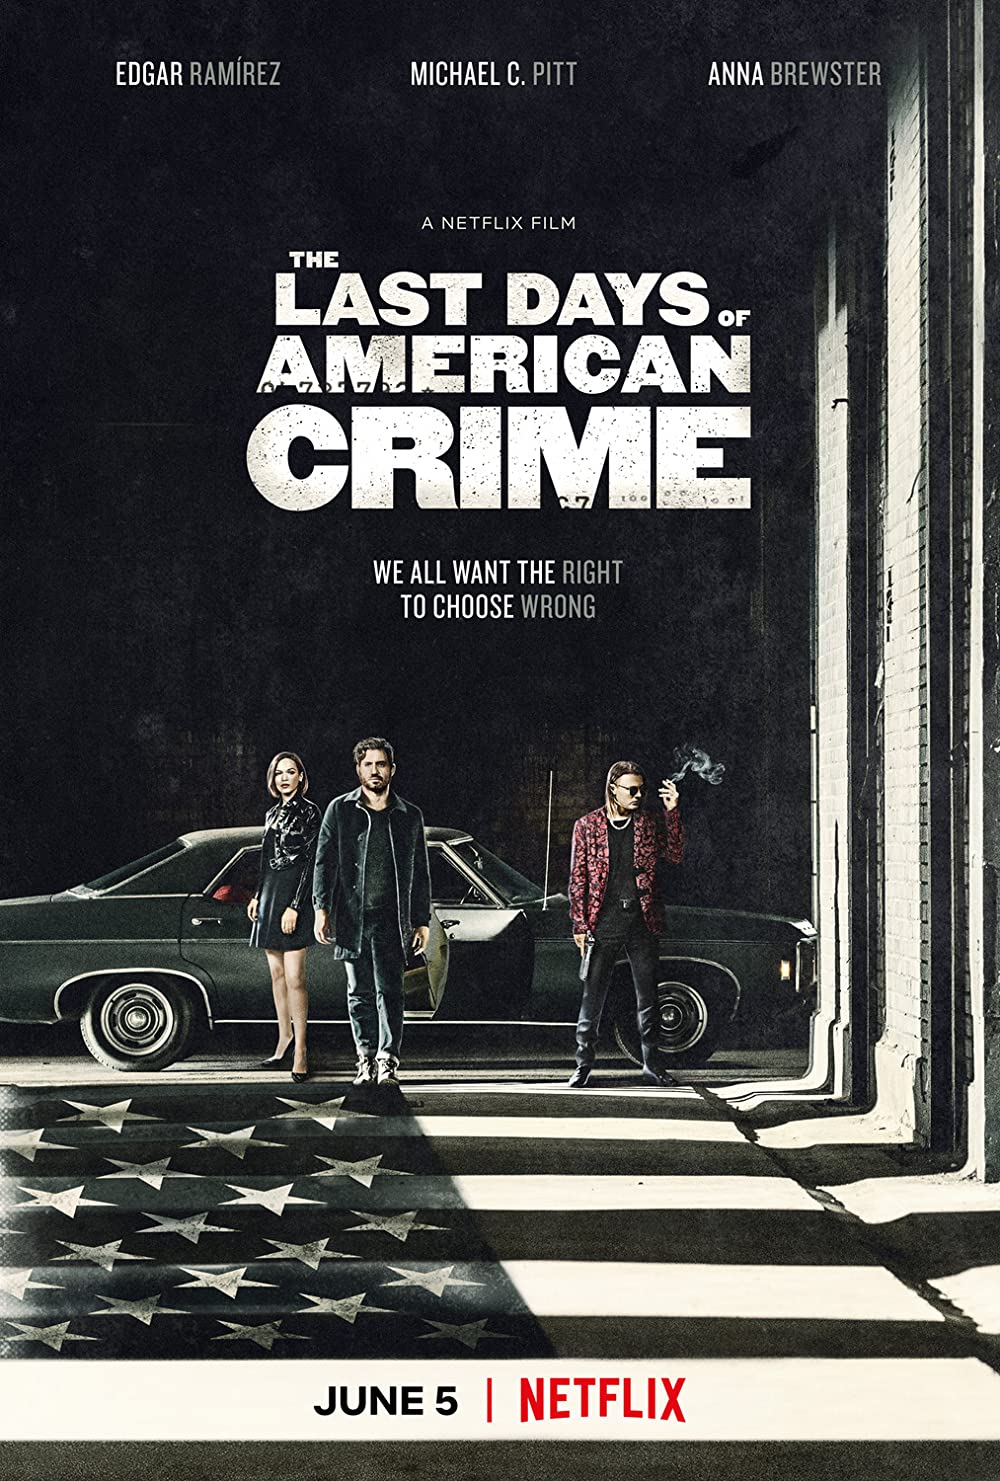 Filmbeschreibung zu The Last Days of American Crime